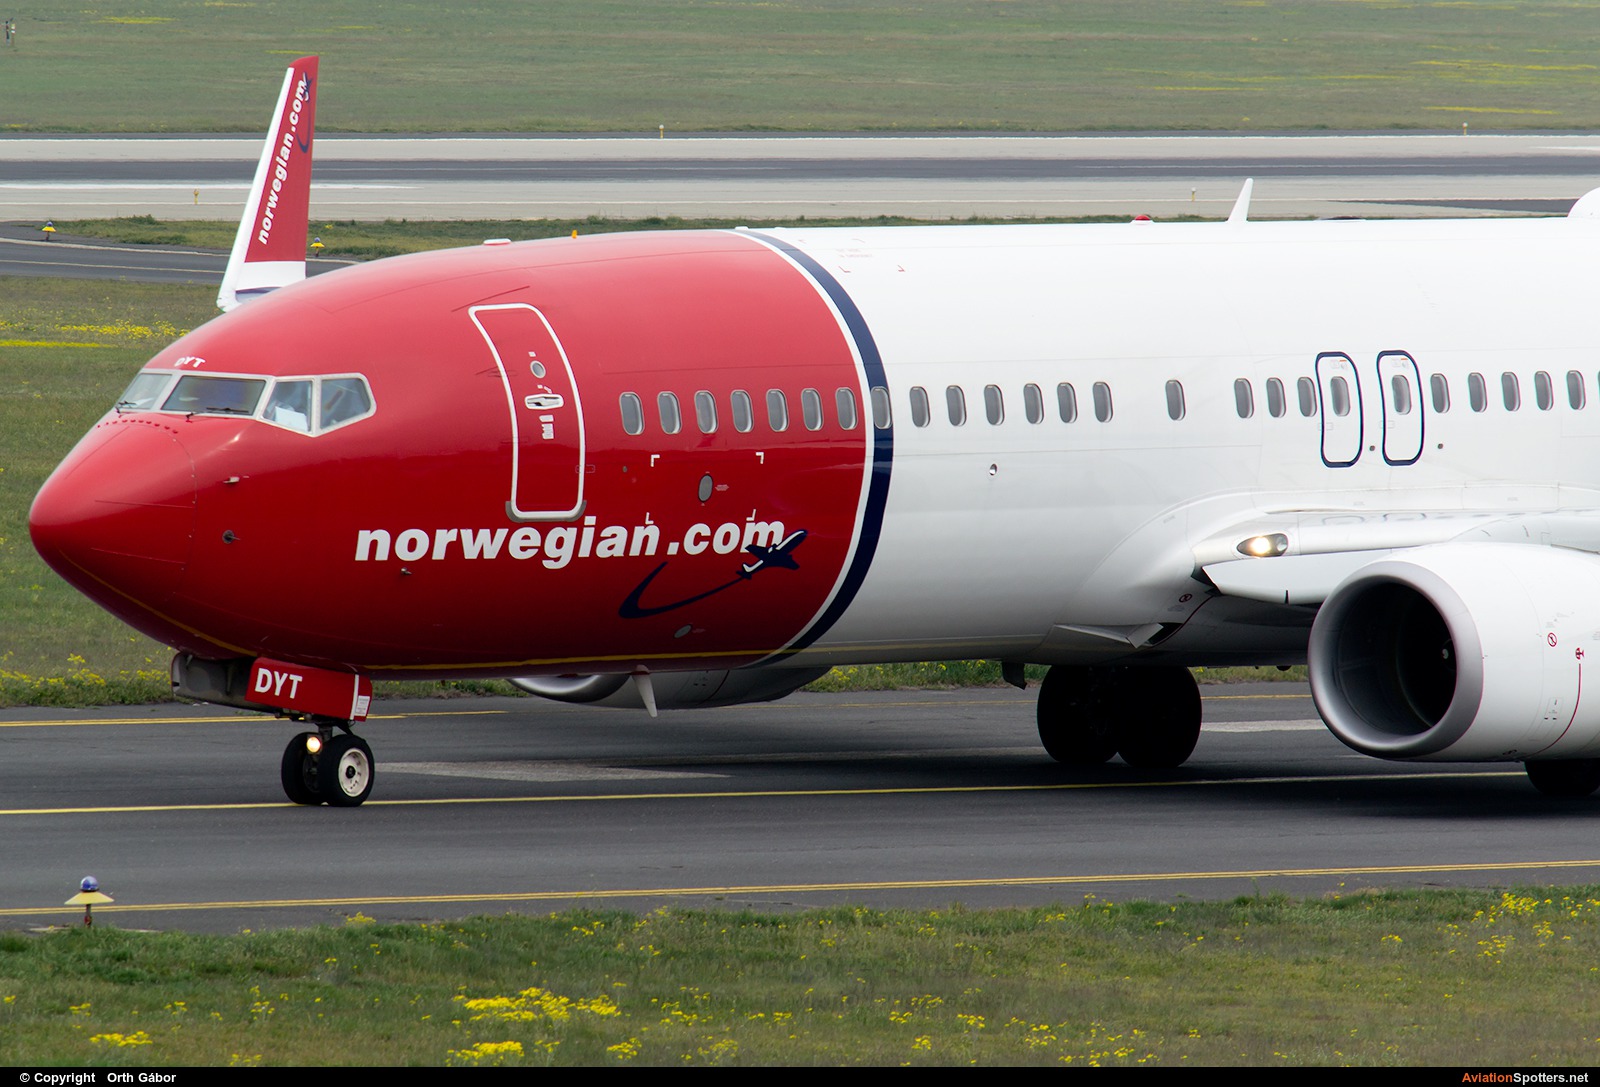 Norwegian Air Shuttle  -  737-800  (LN-DYT) By Orth Gábor (Roodkop)